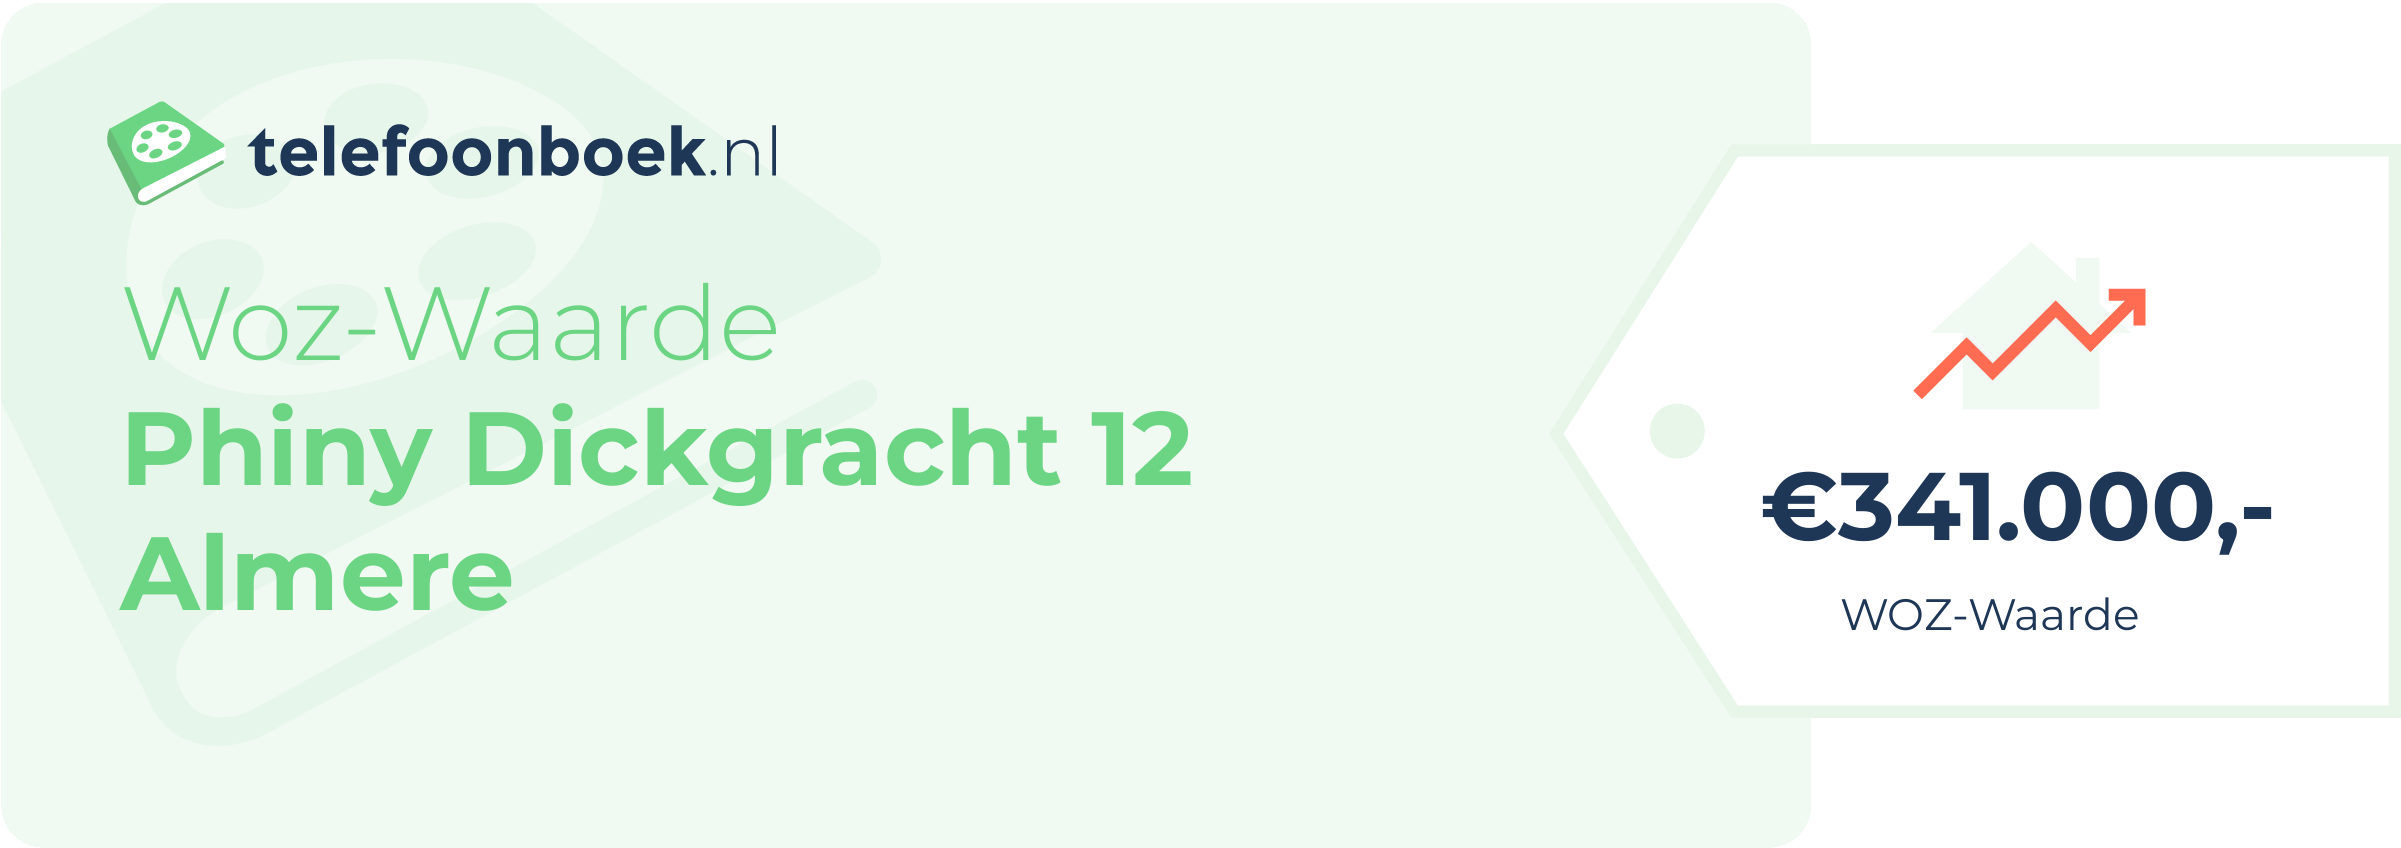 WOZ-waarde Phiny Dickgracht 12 Almere